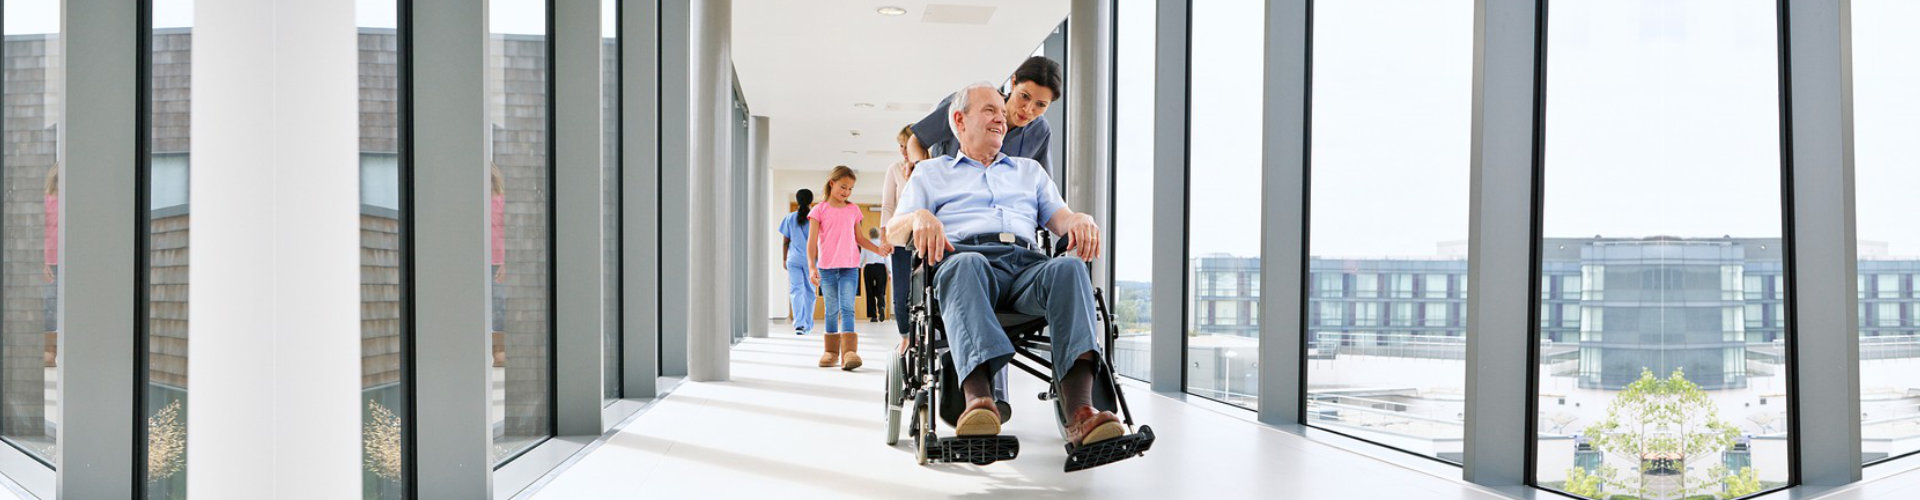 senior man on wheelchair accompanied by his caregiver